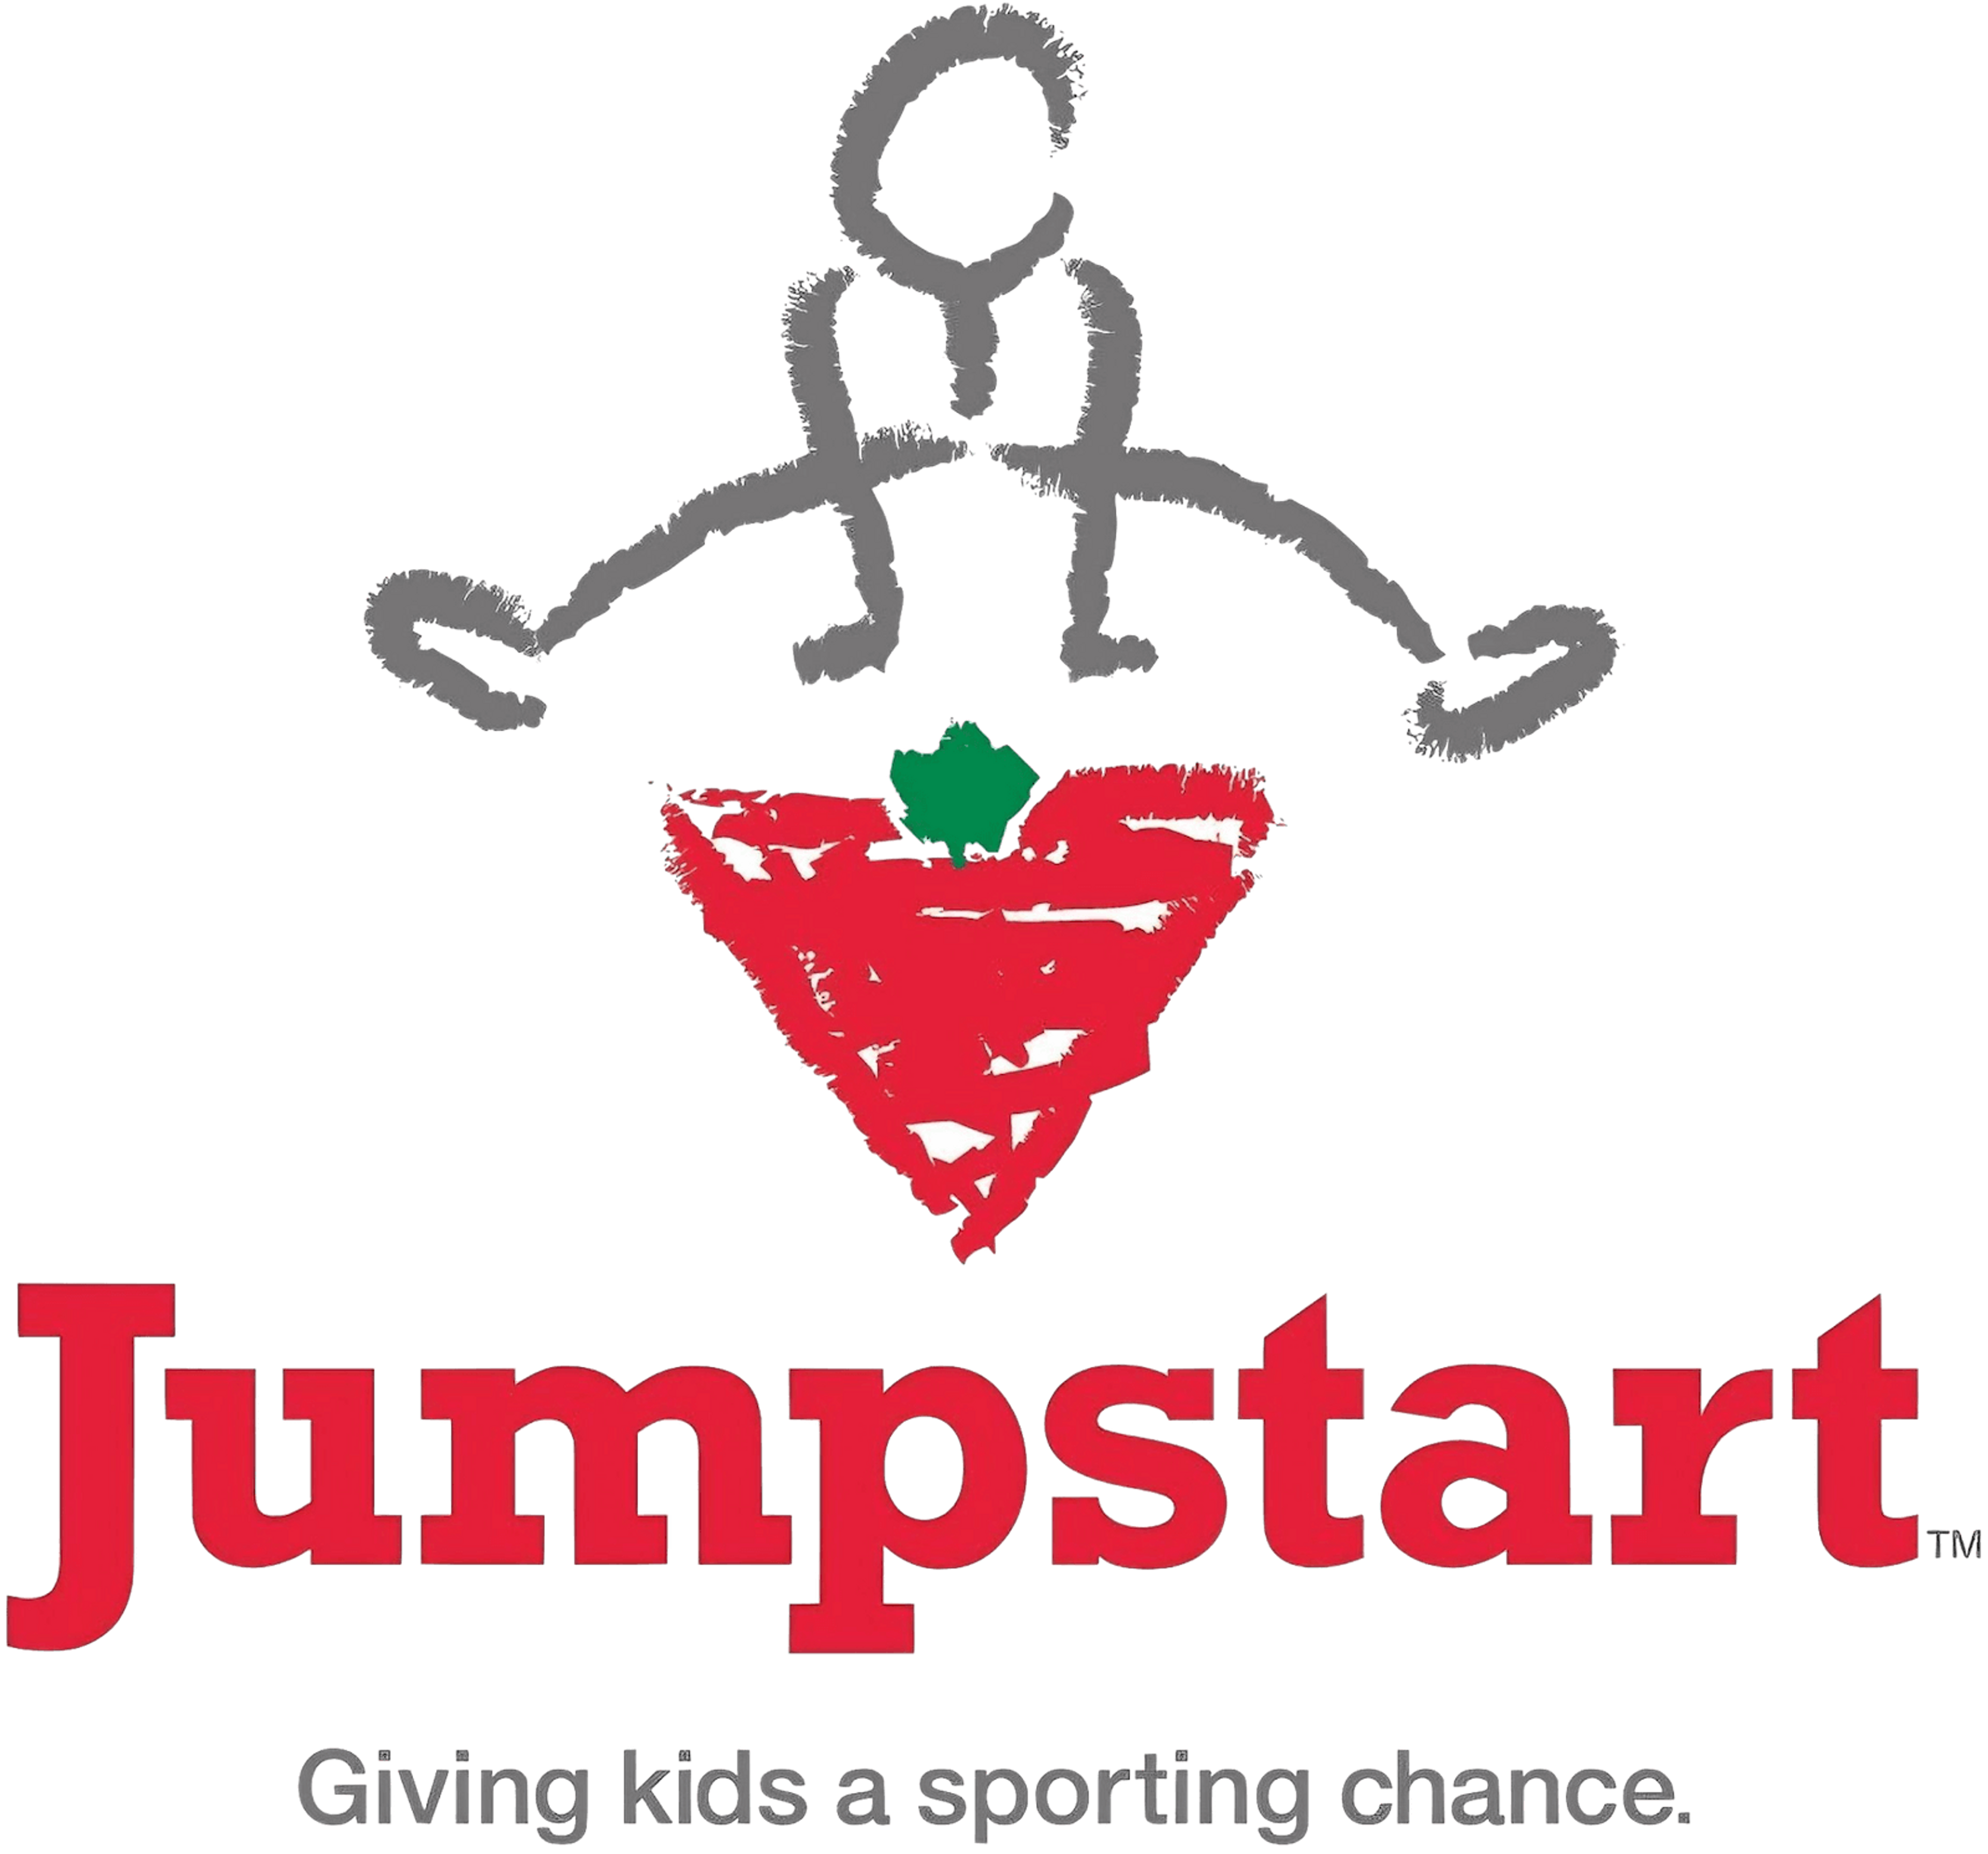 Jumpstart logo on a transparent background